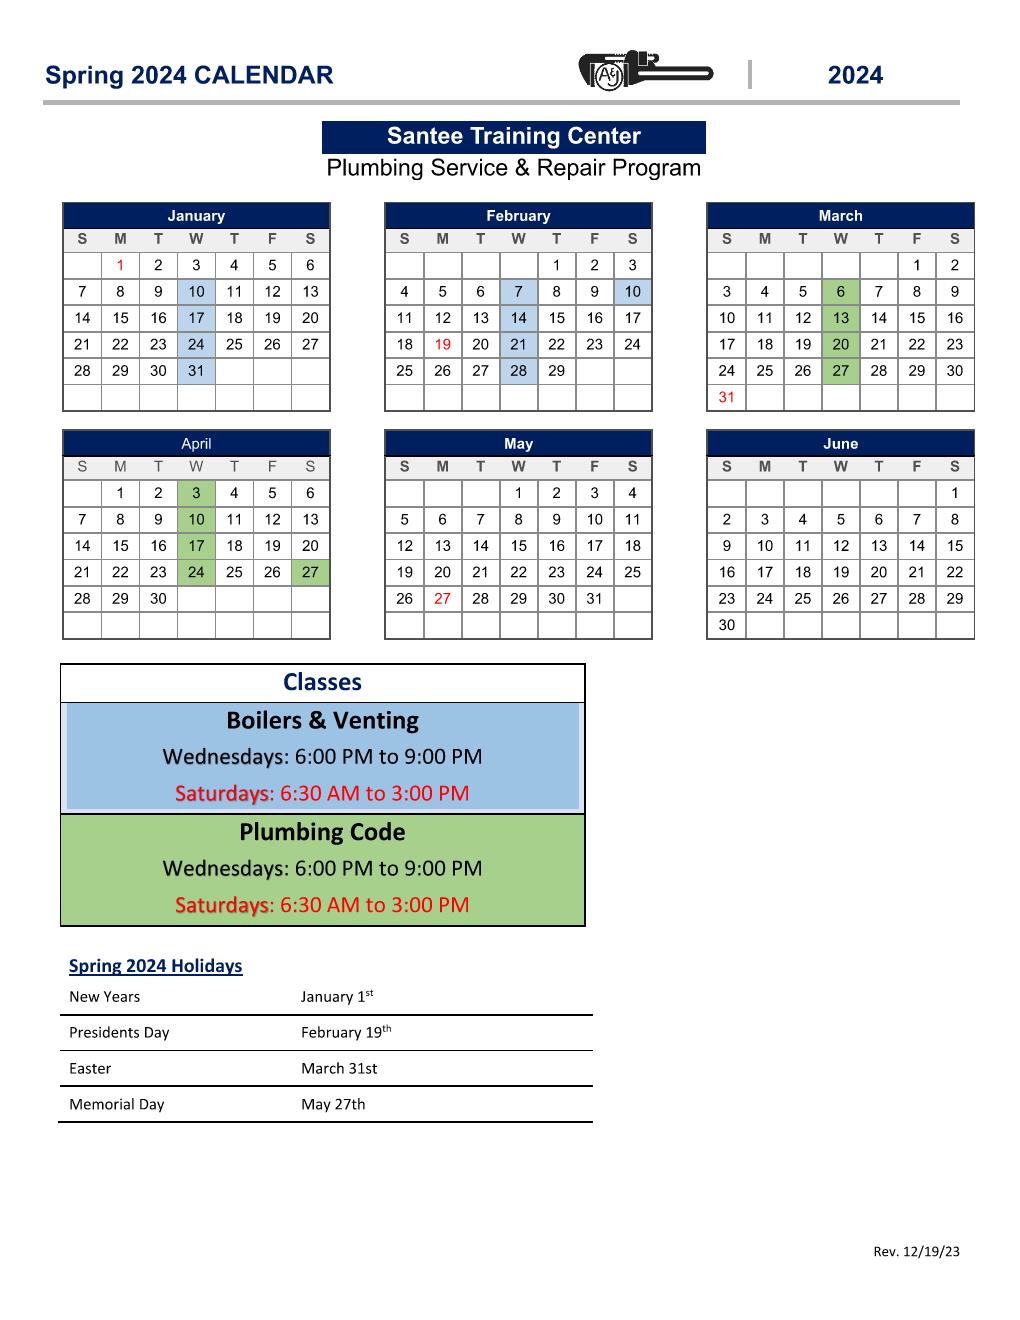 Current Service & Repair Calendar for Santee